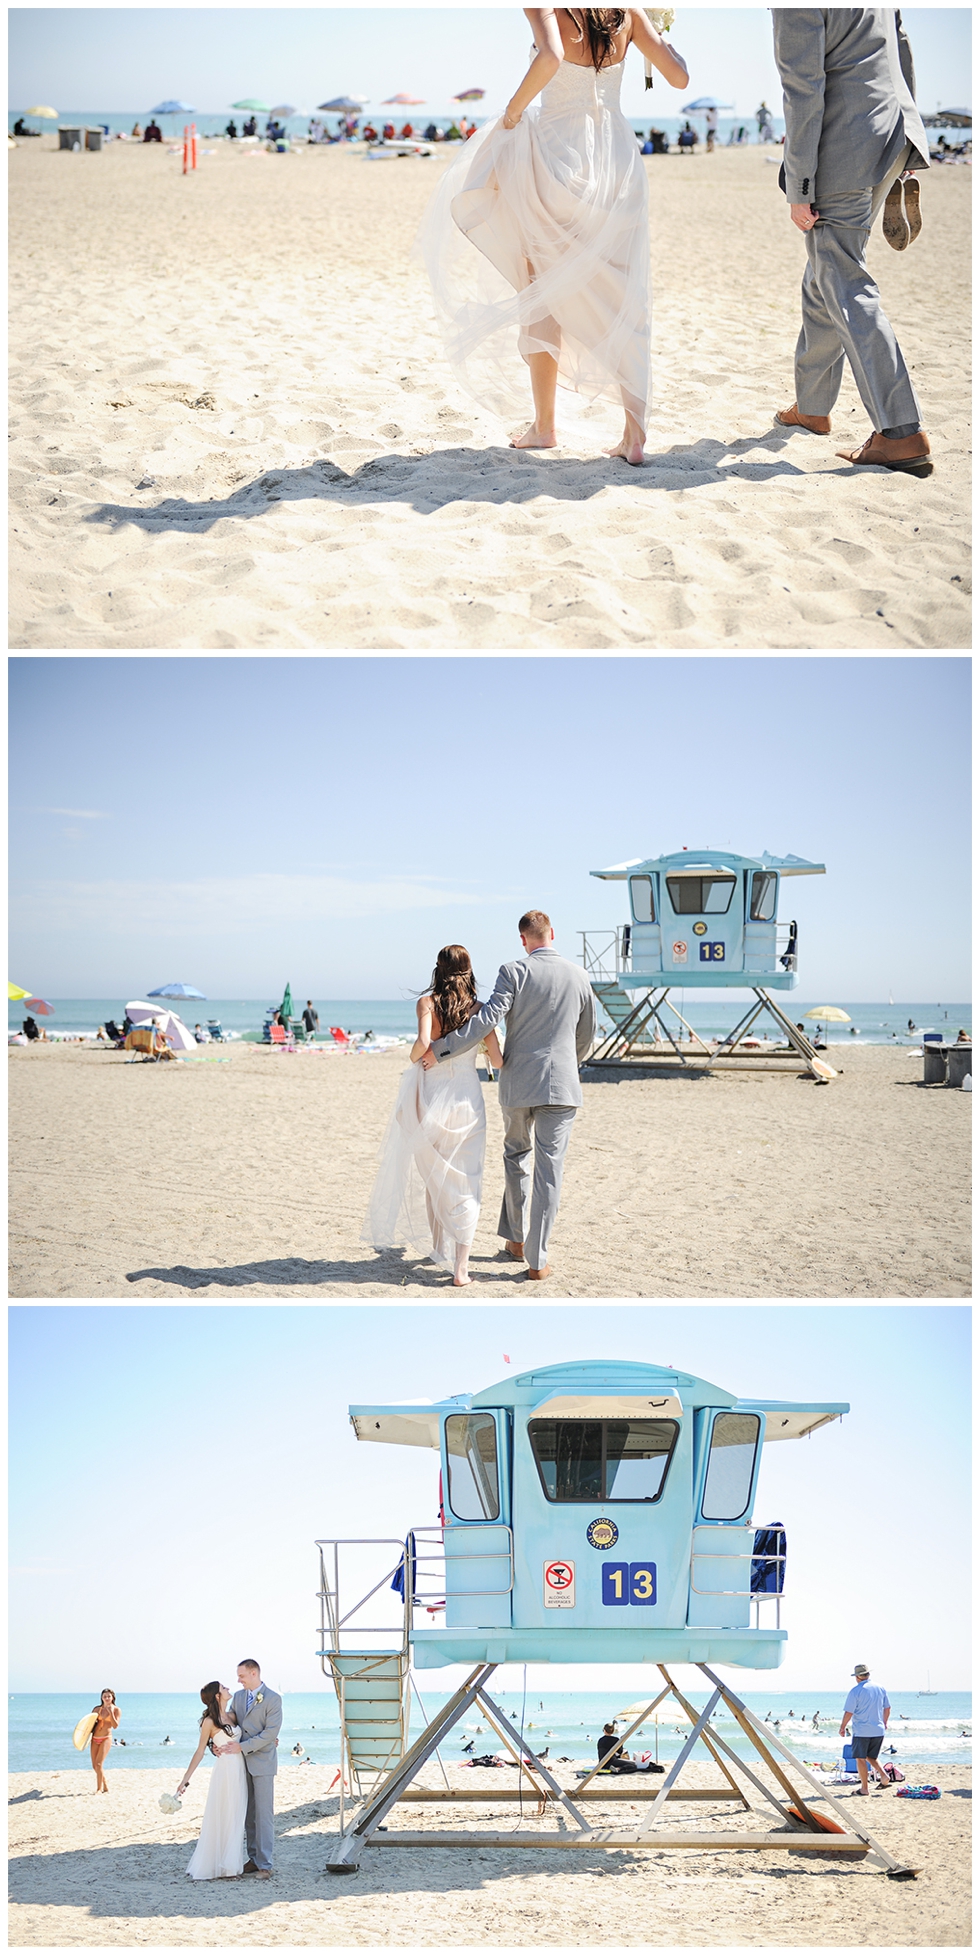 Destination-beach-wedding-photos-overlooking-ocean-Nick-and-Lisa-20